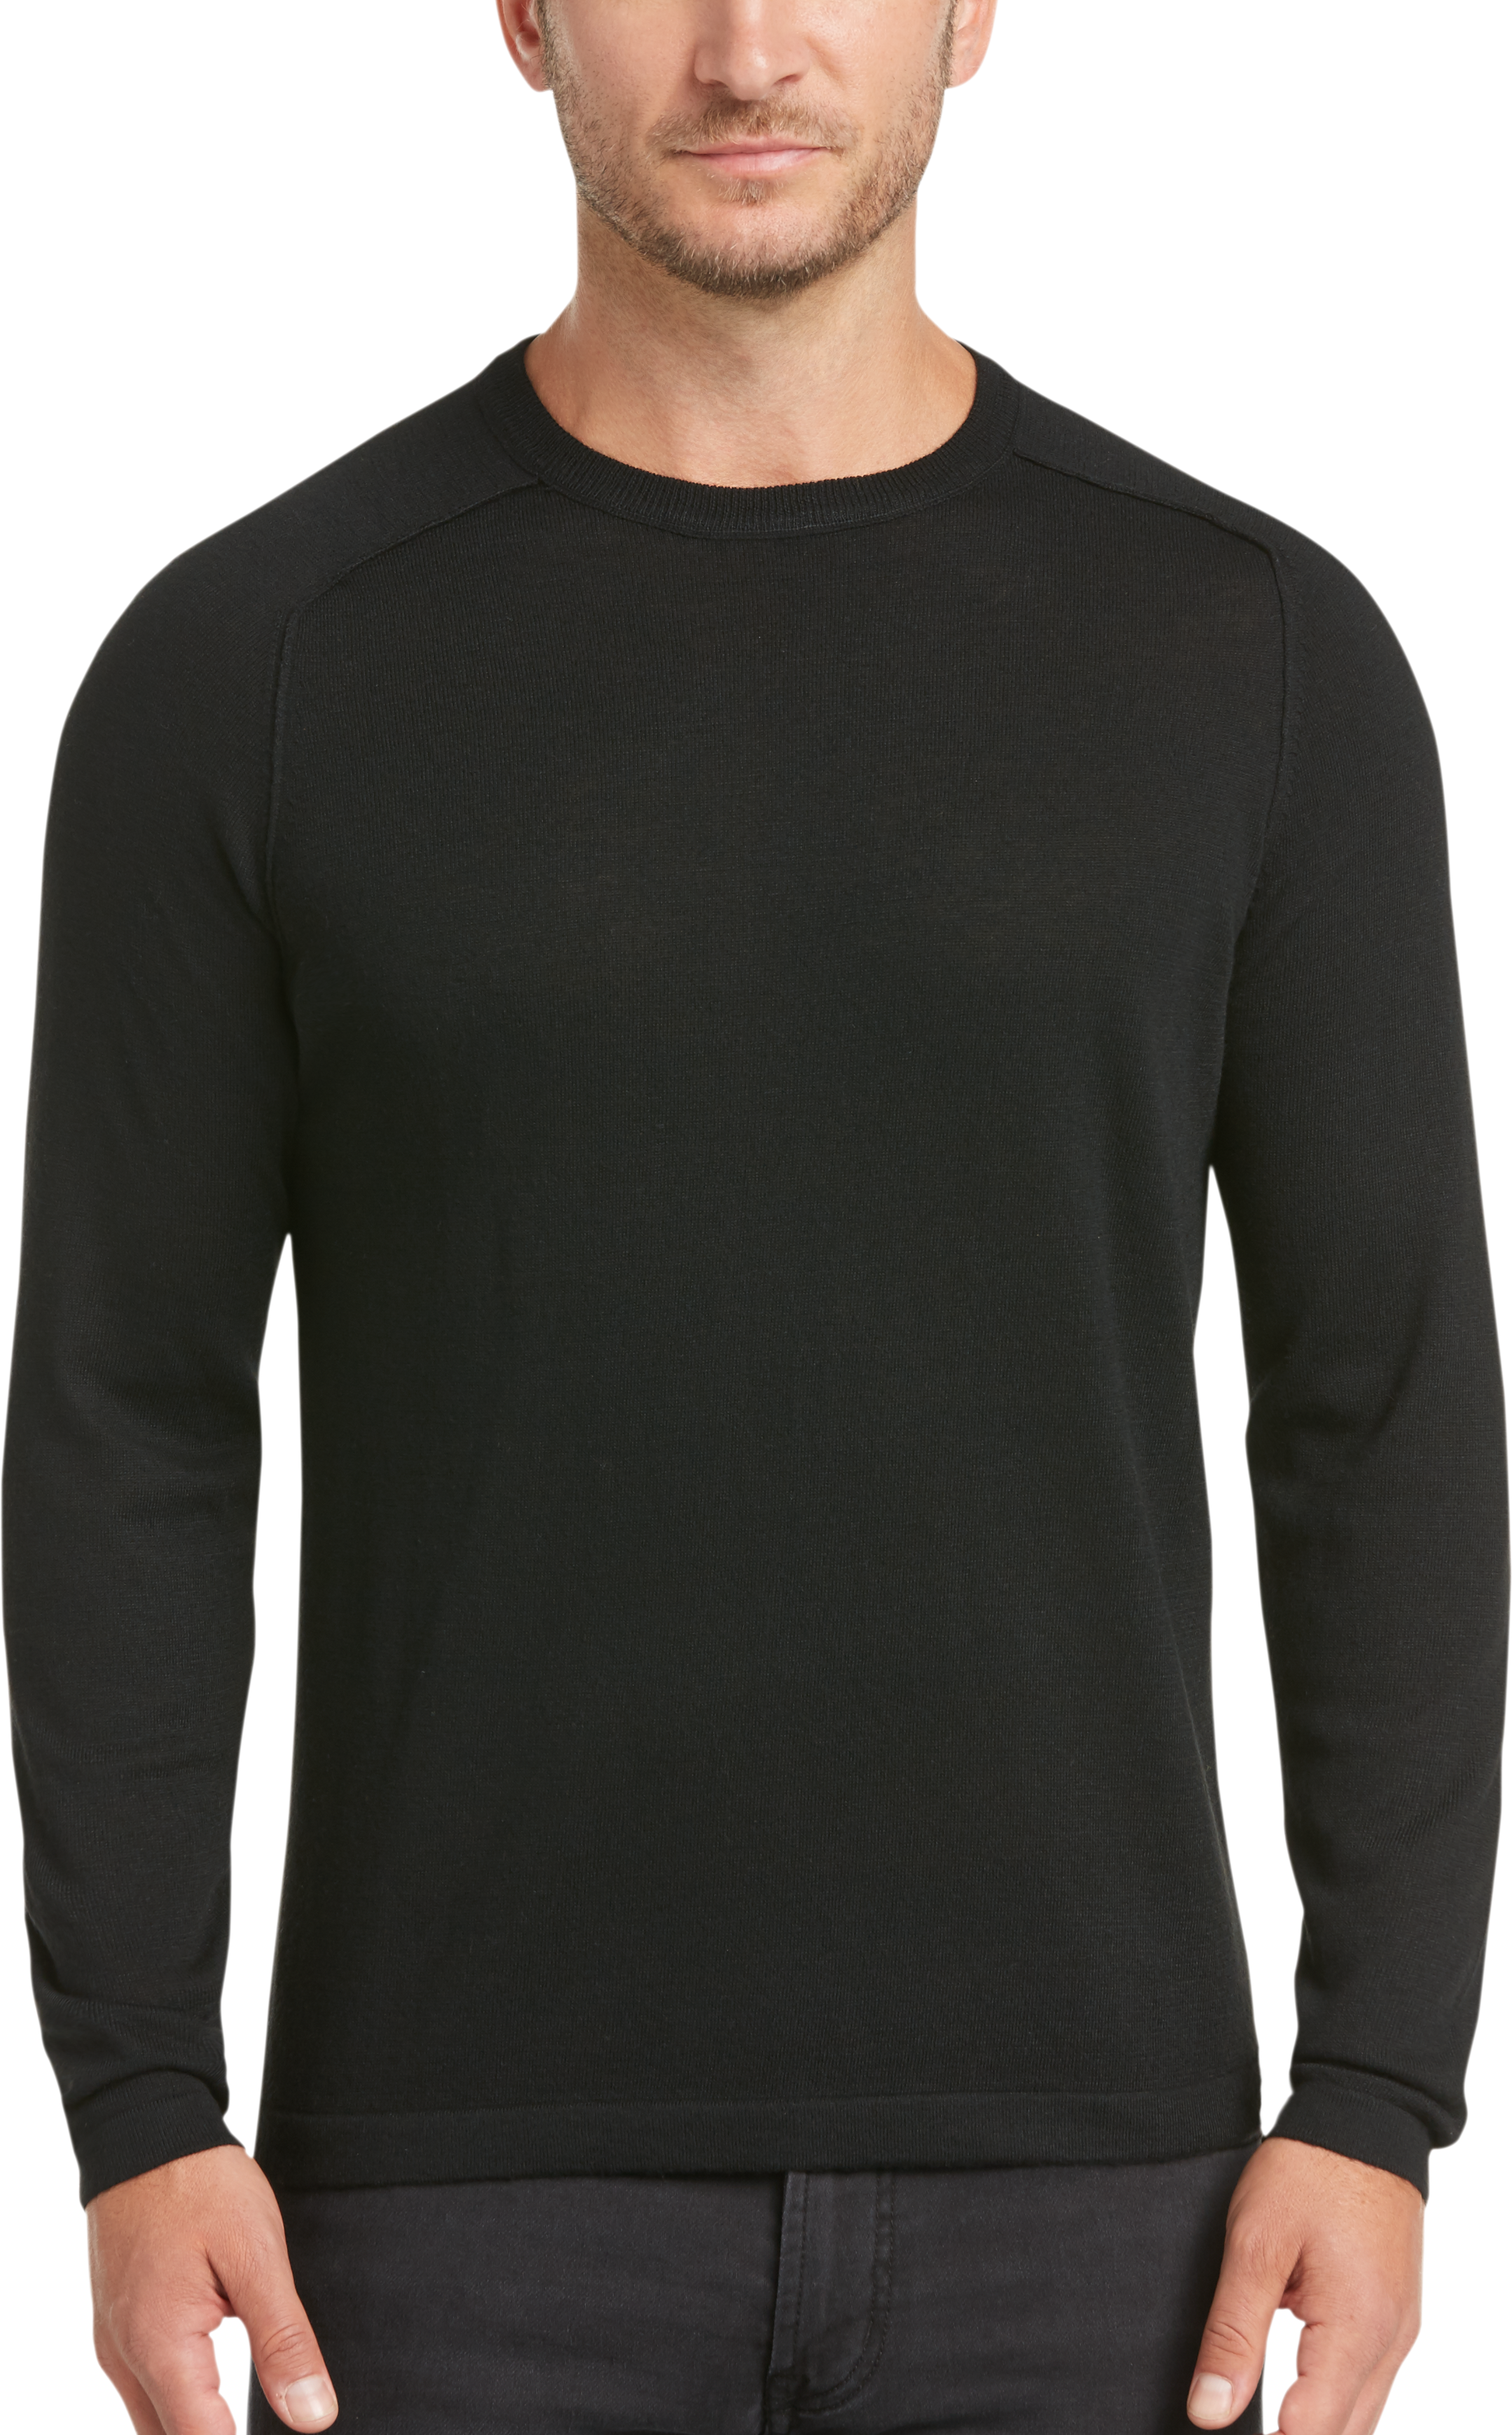 JOE Joseph Abboud Black Raglan Crew Neck Sweater - Men's Sale | Men's ...